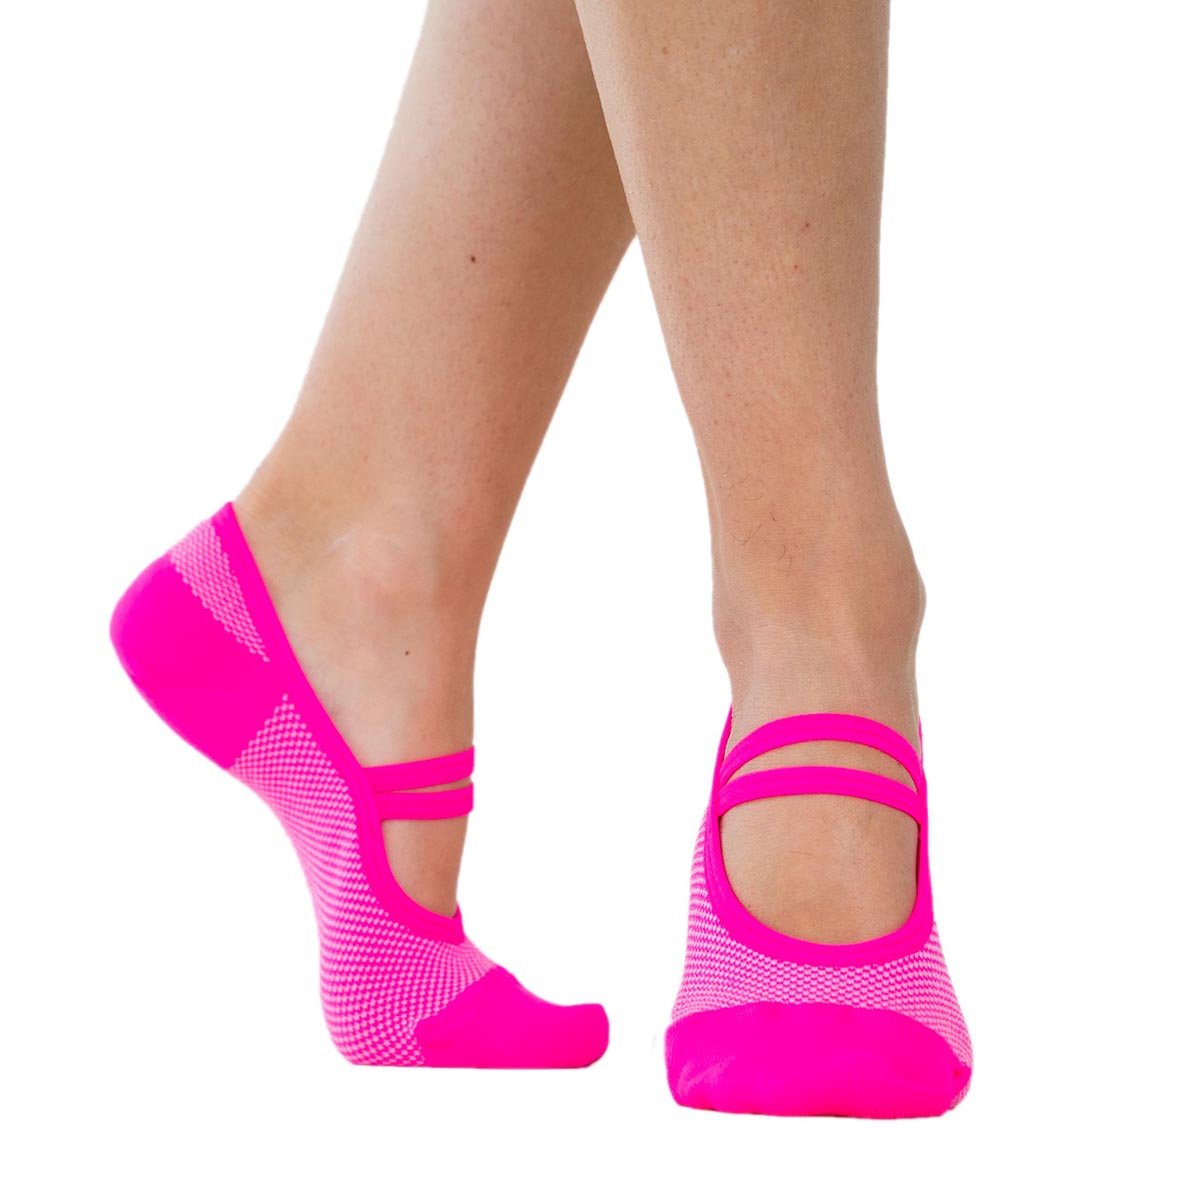 Dancer Pilates Sock – SylviaP Sportswear LLC